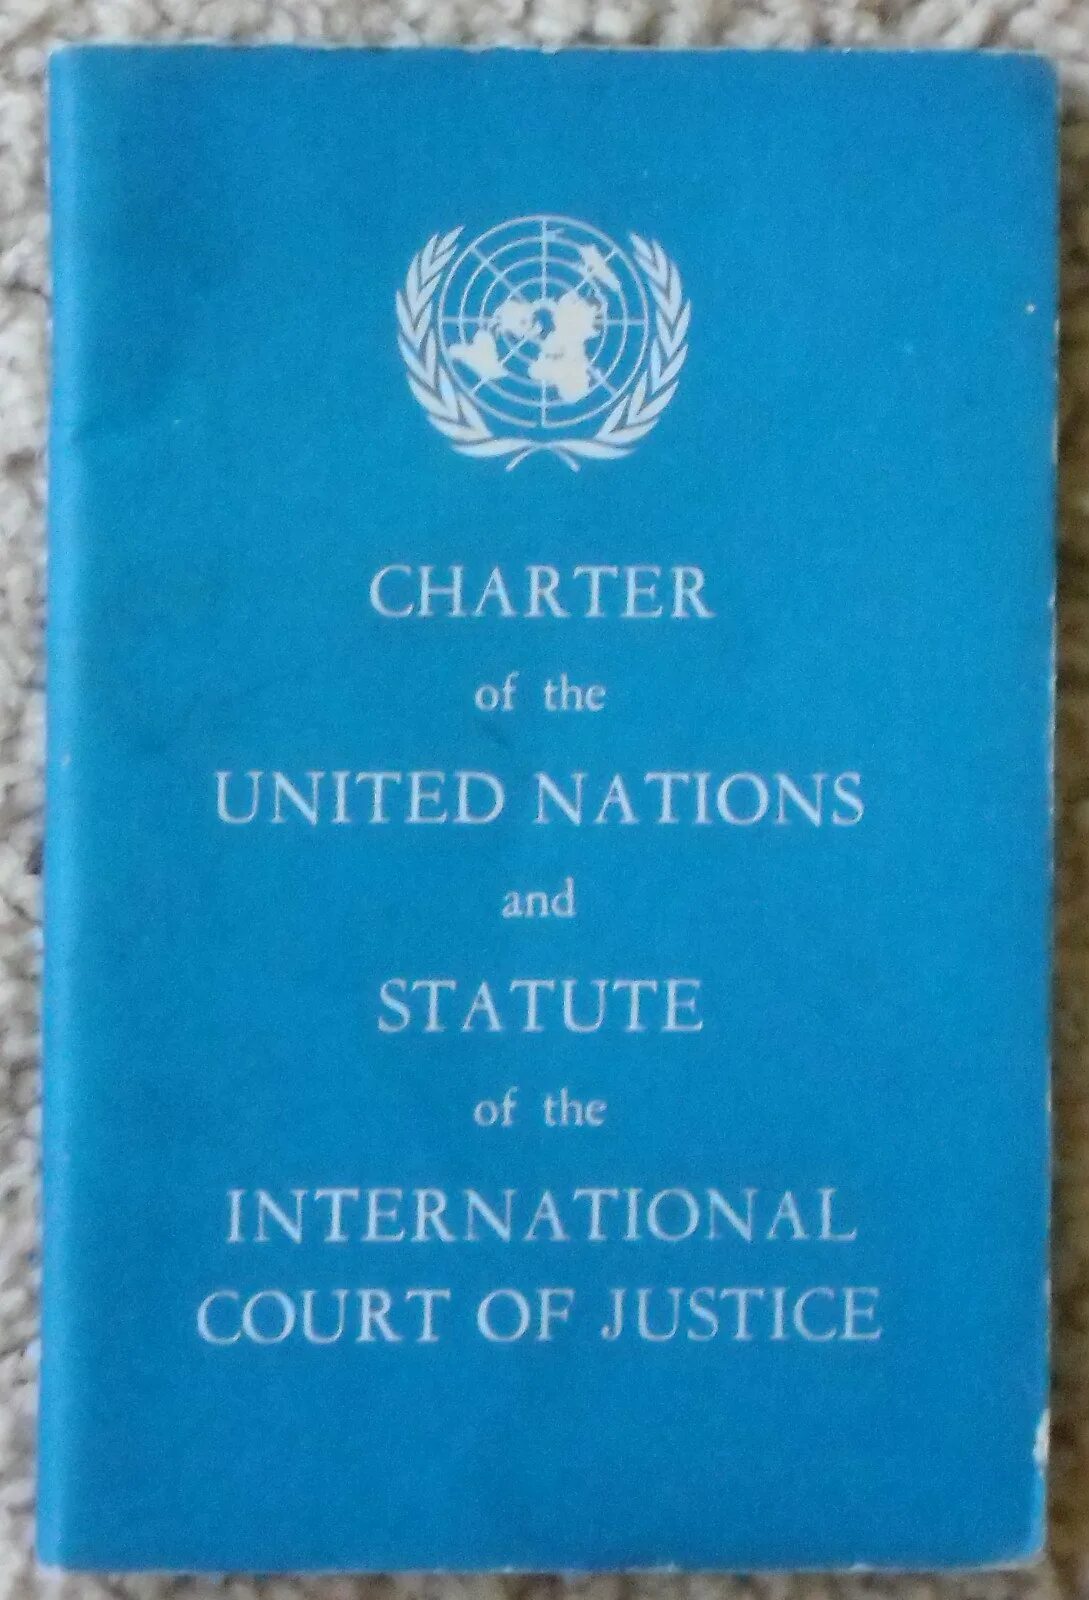 Устав оон вступил. Устав организации Объединенных наций 1945 г. Устав ООН книга. Статут международного суда ООН. Устав международного суда ООН.